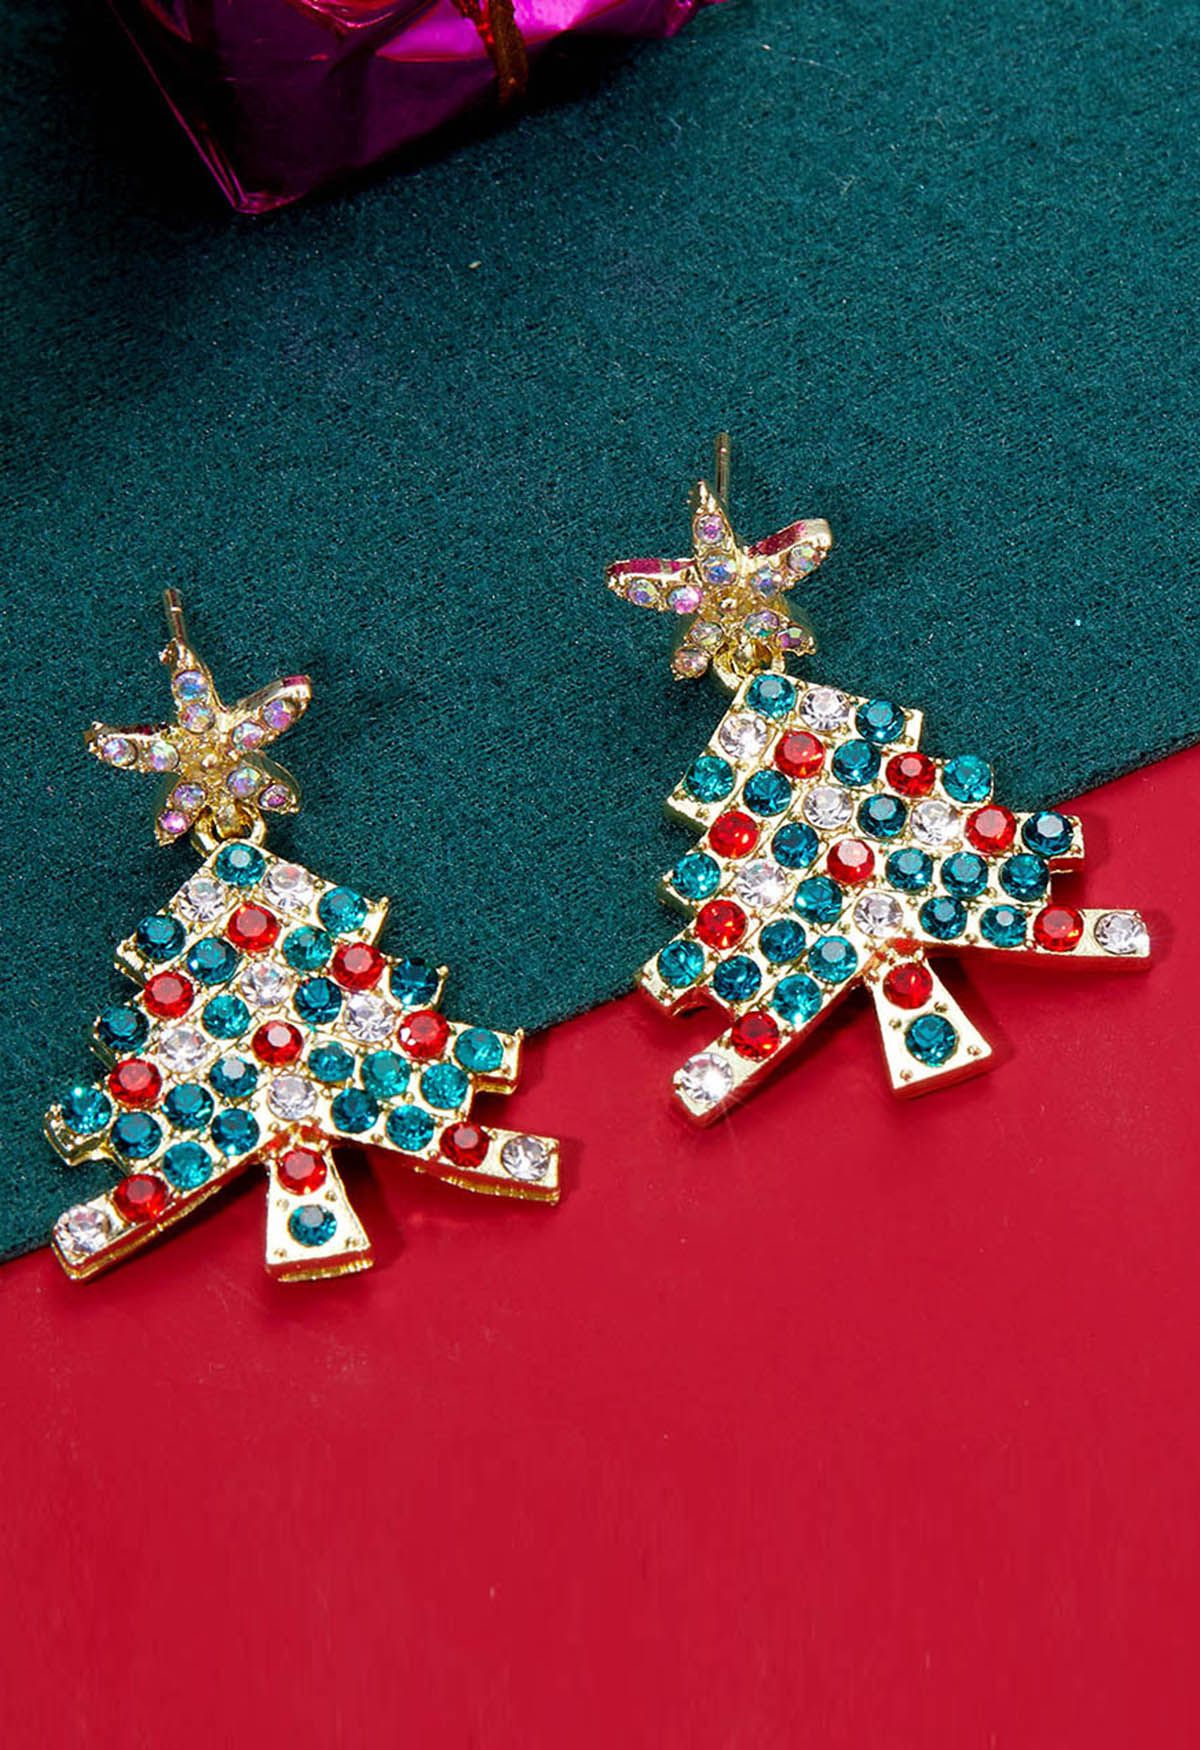 Full Rhinestone Christmas Tree Drop Earrings